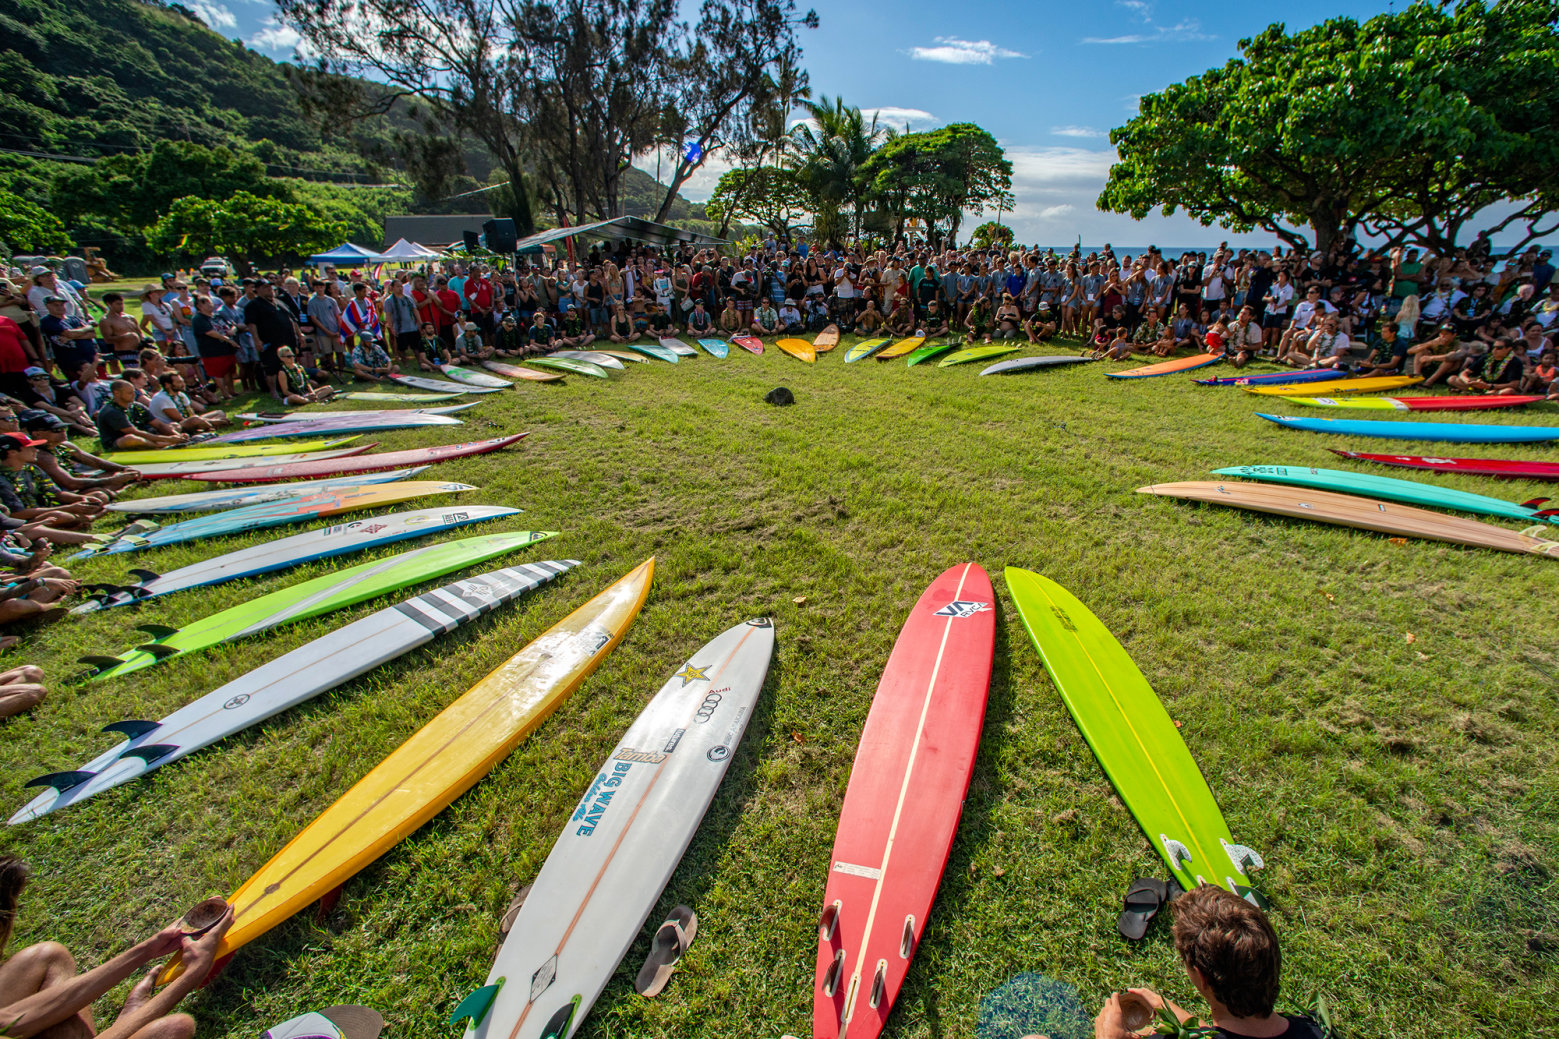 Eddie Aikau Invitational Opening Ceremony Kicks Off at Waimea Bay